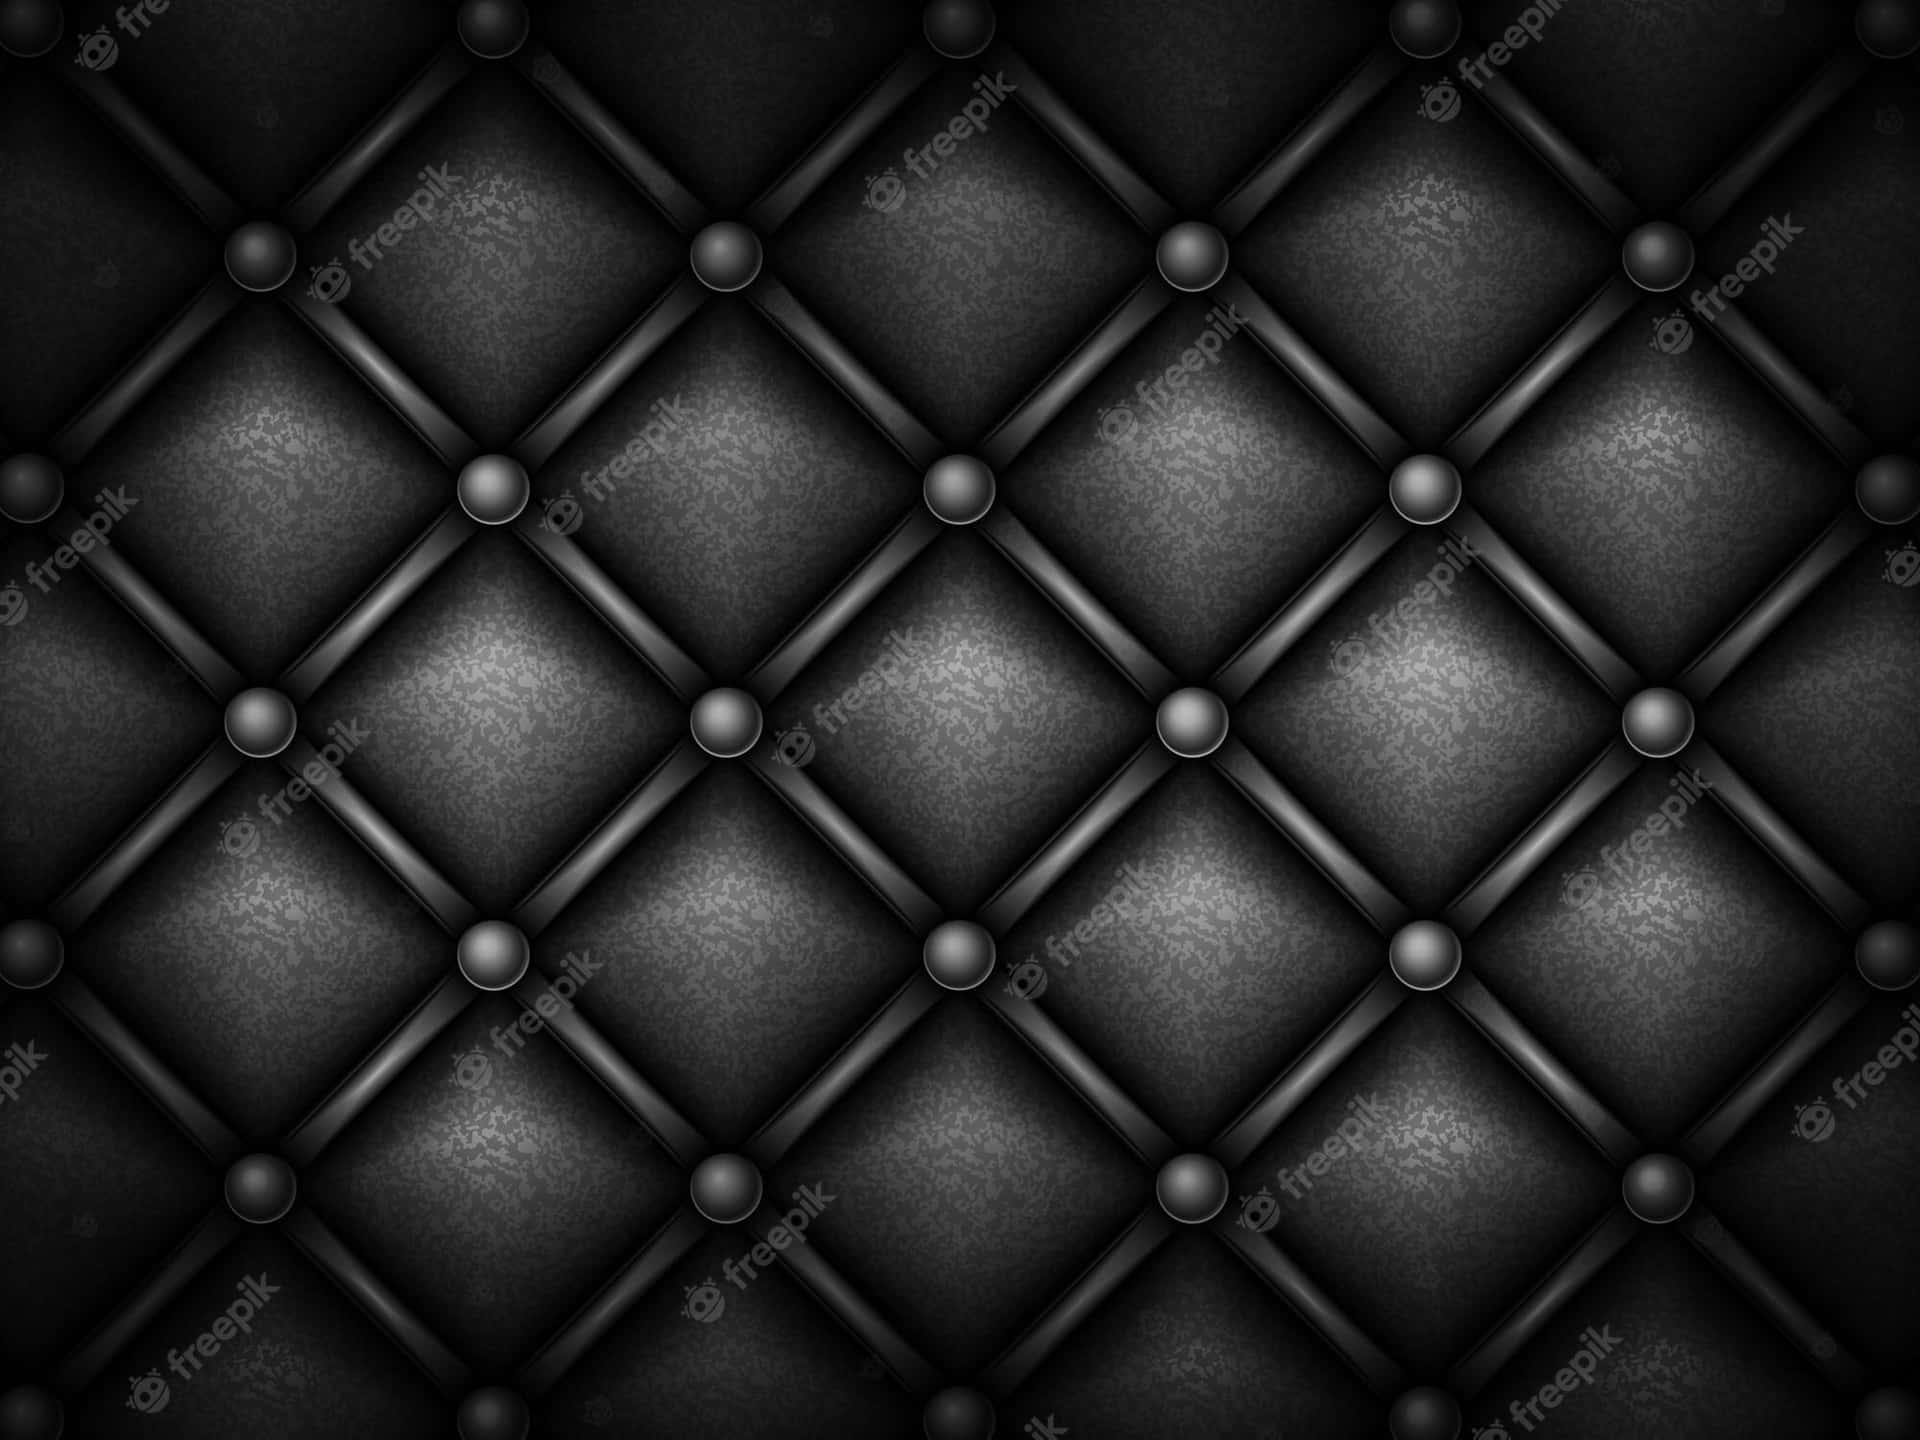 Black Leather Texture Images - Free Download on Freepik